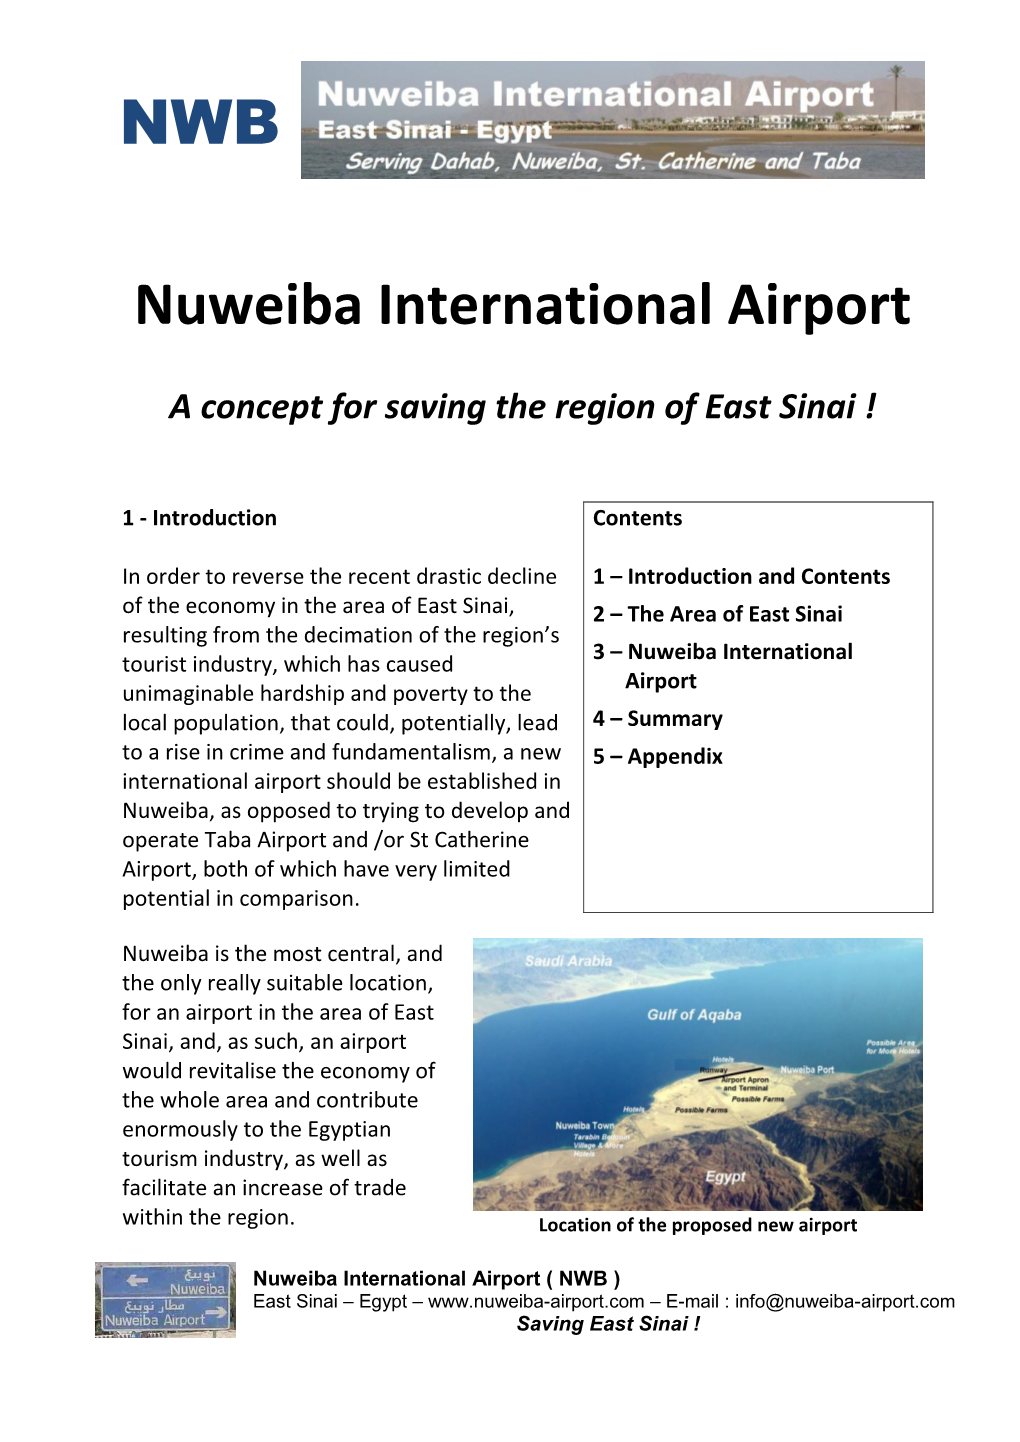 NWB Nuweiba International Airport